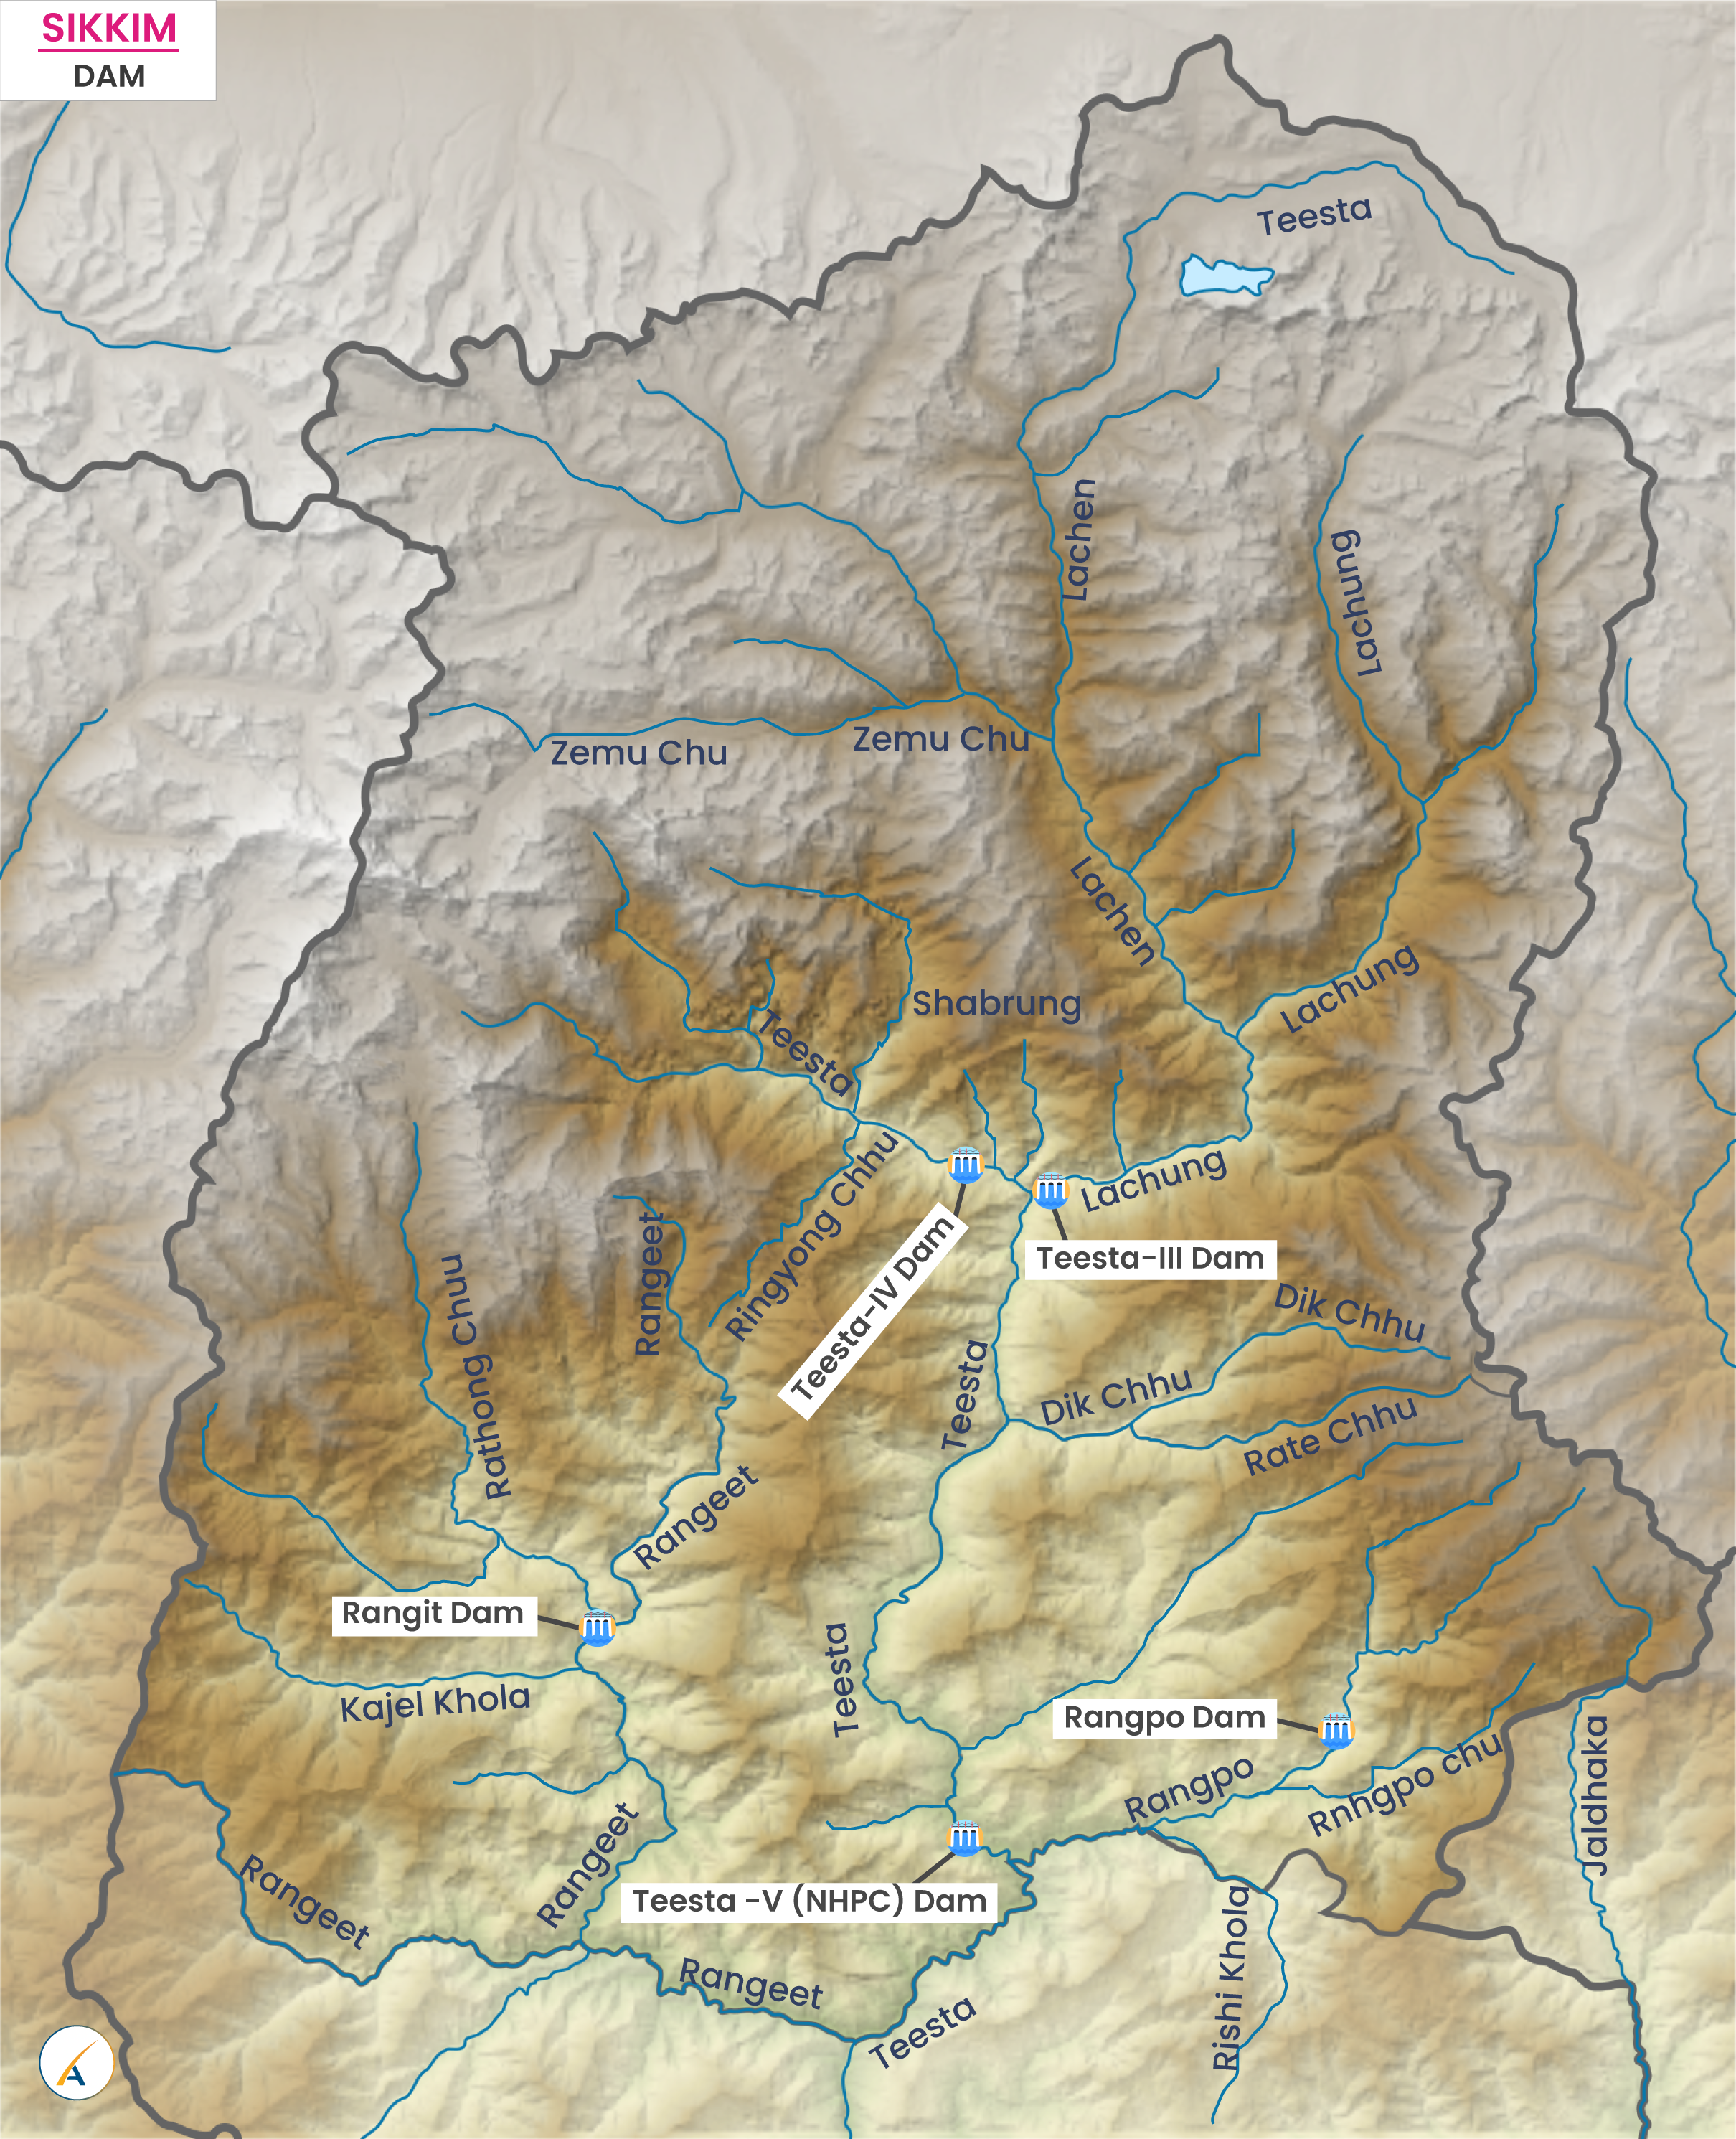 Major Dams in Sikkim